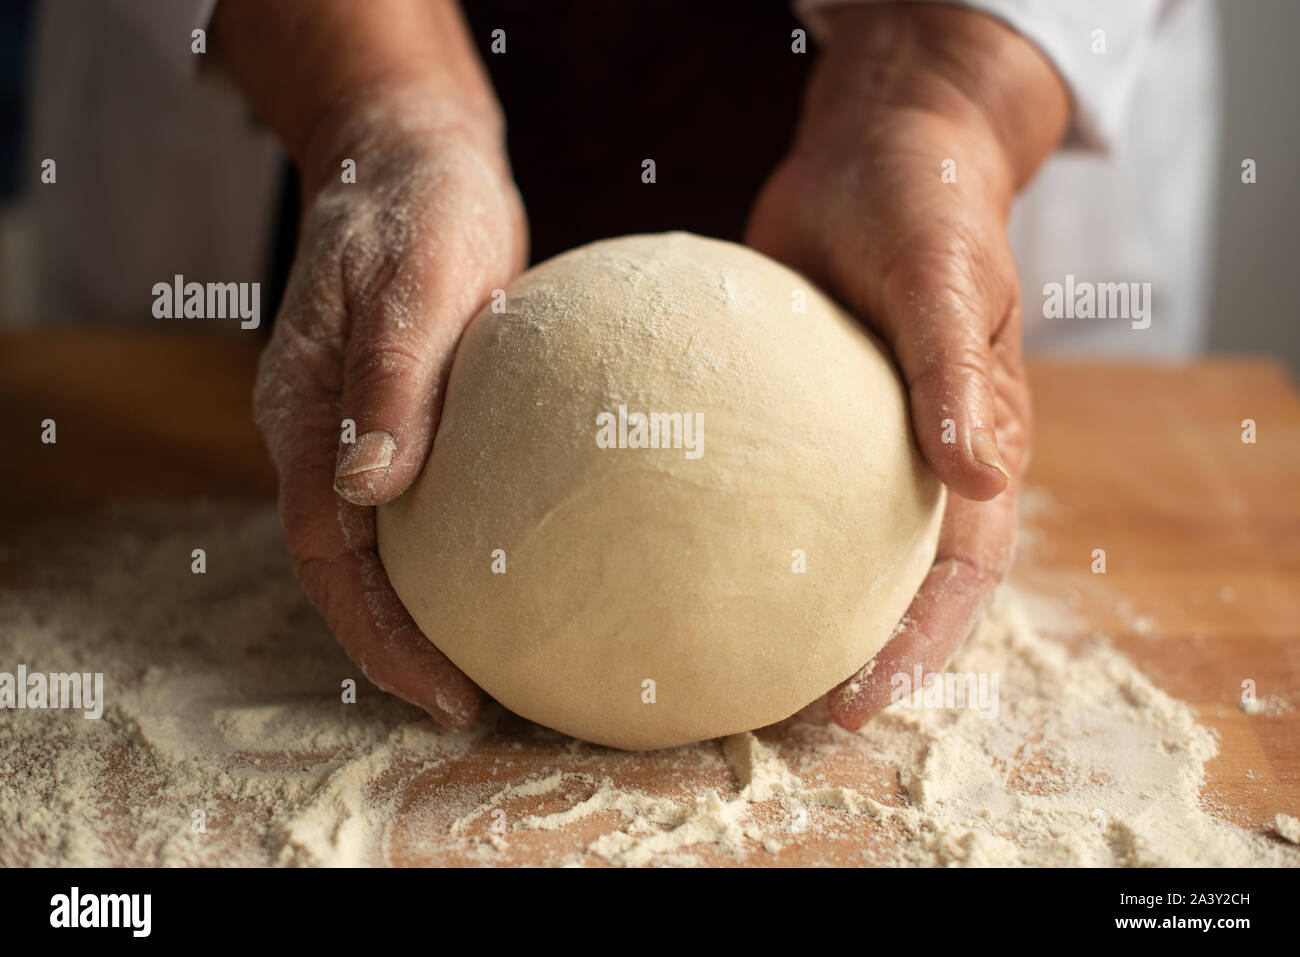 Artisan baker kneading sourdough bread- close-up Stock Photo